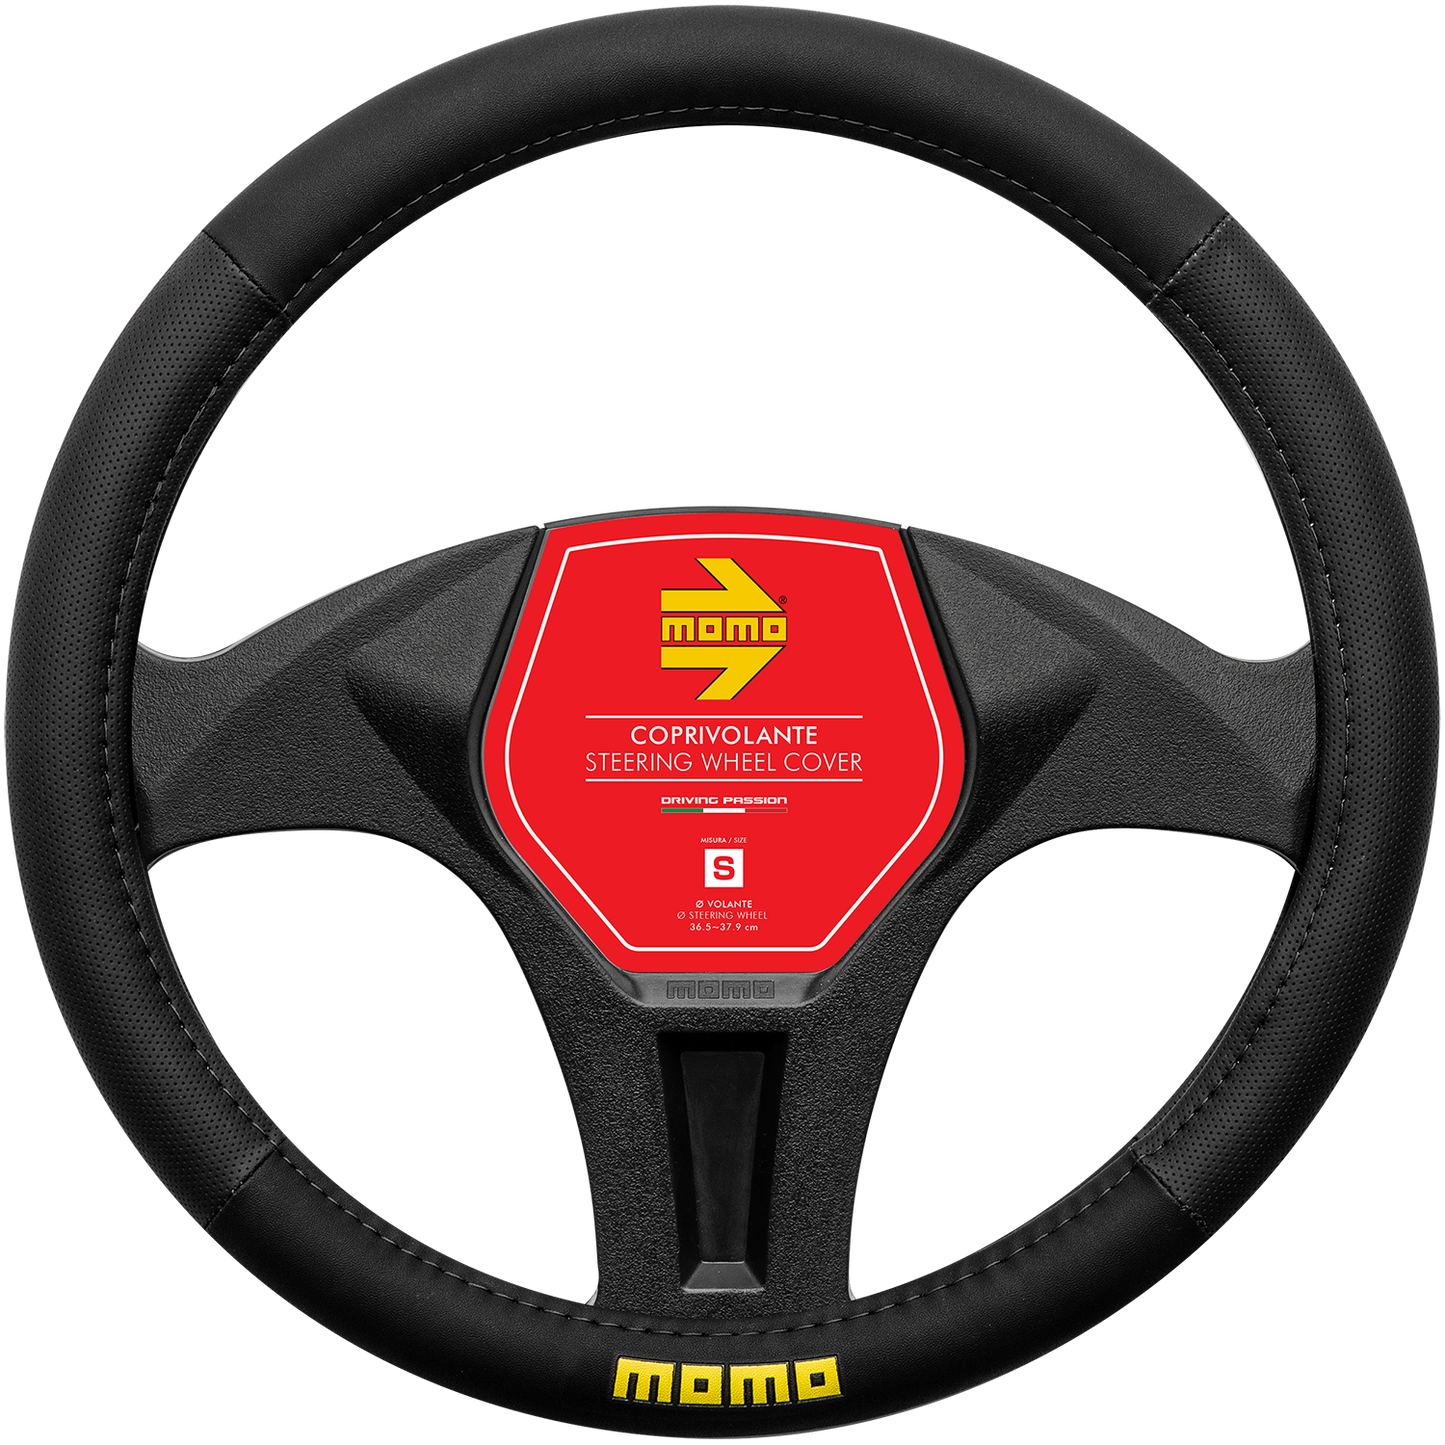 Momo Steering Wheel Cover - EASY - BLACK - SIZE S